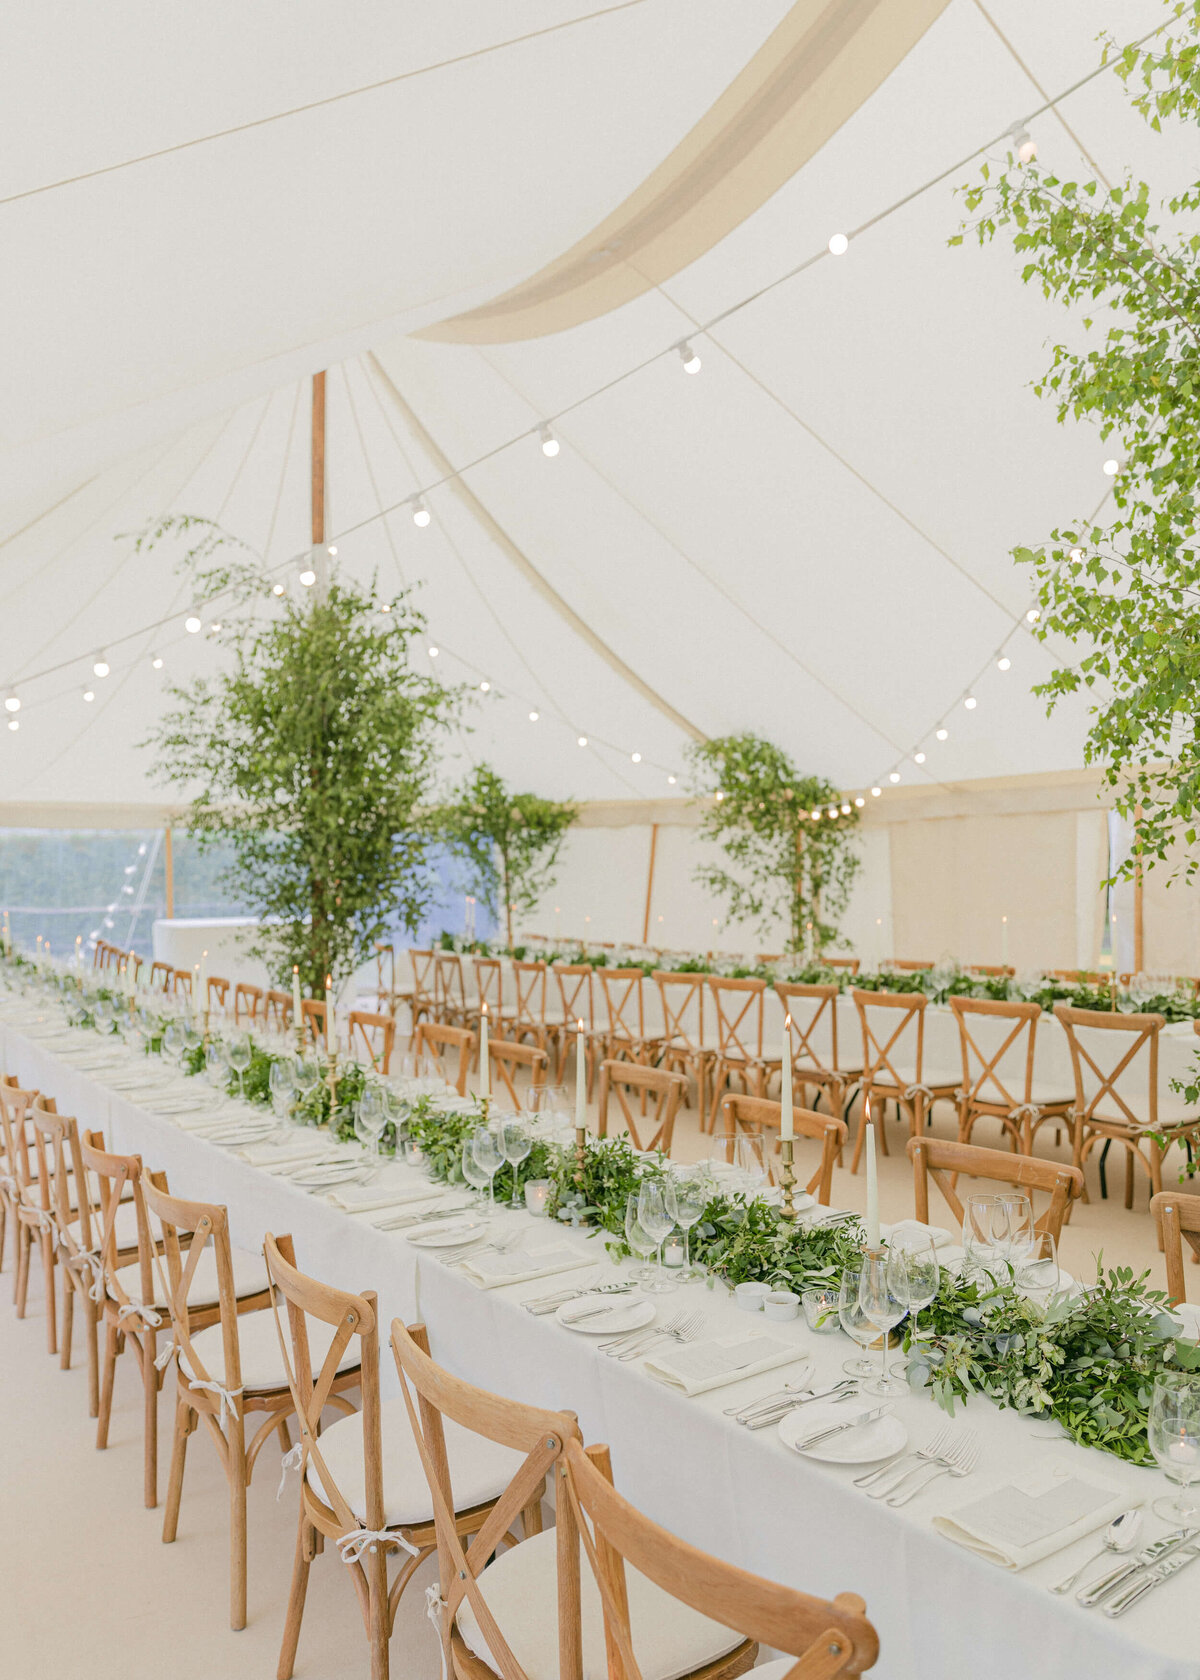 chloe-winstanley-weddings-sail-peg-sperry-sailcloth-tent-tablescape